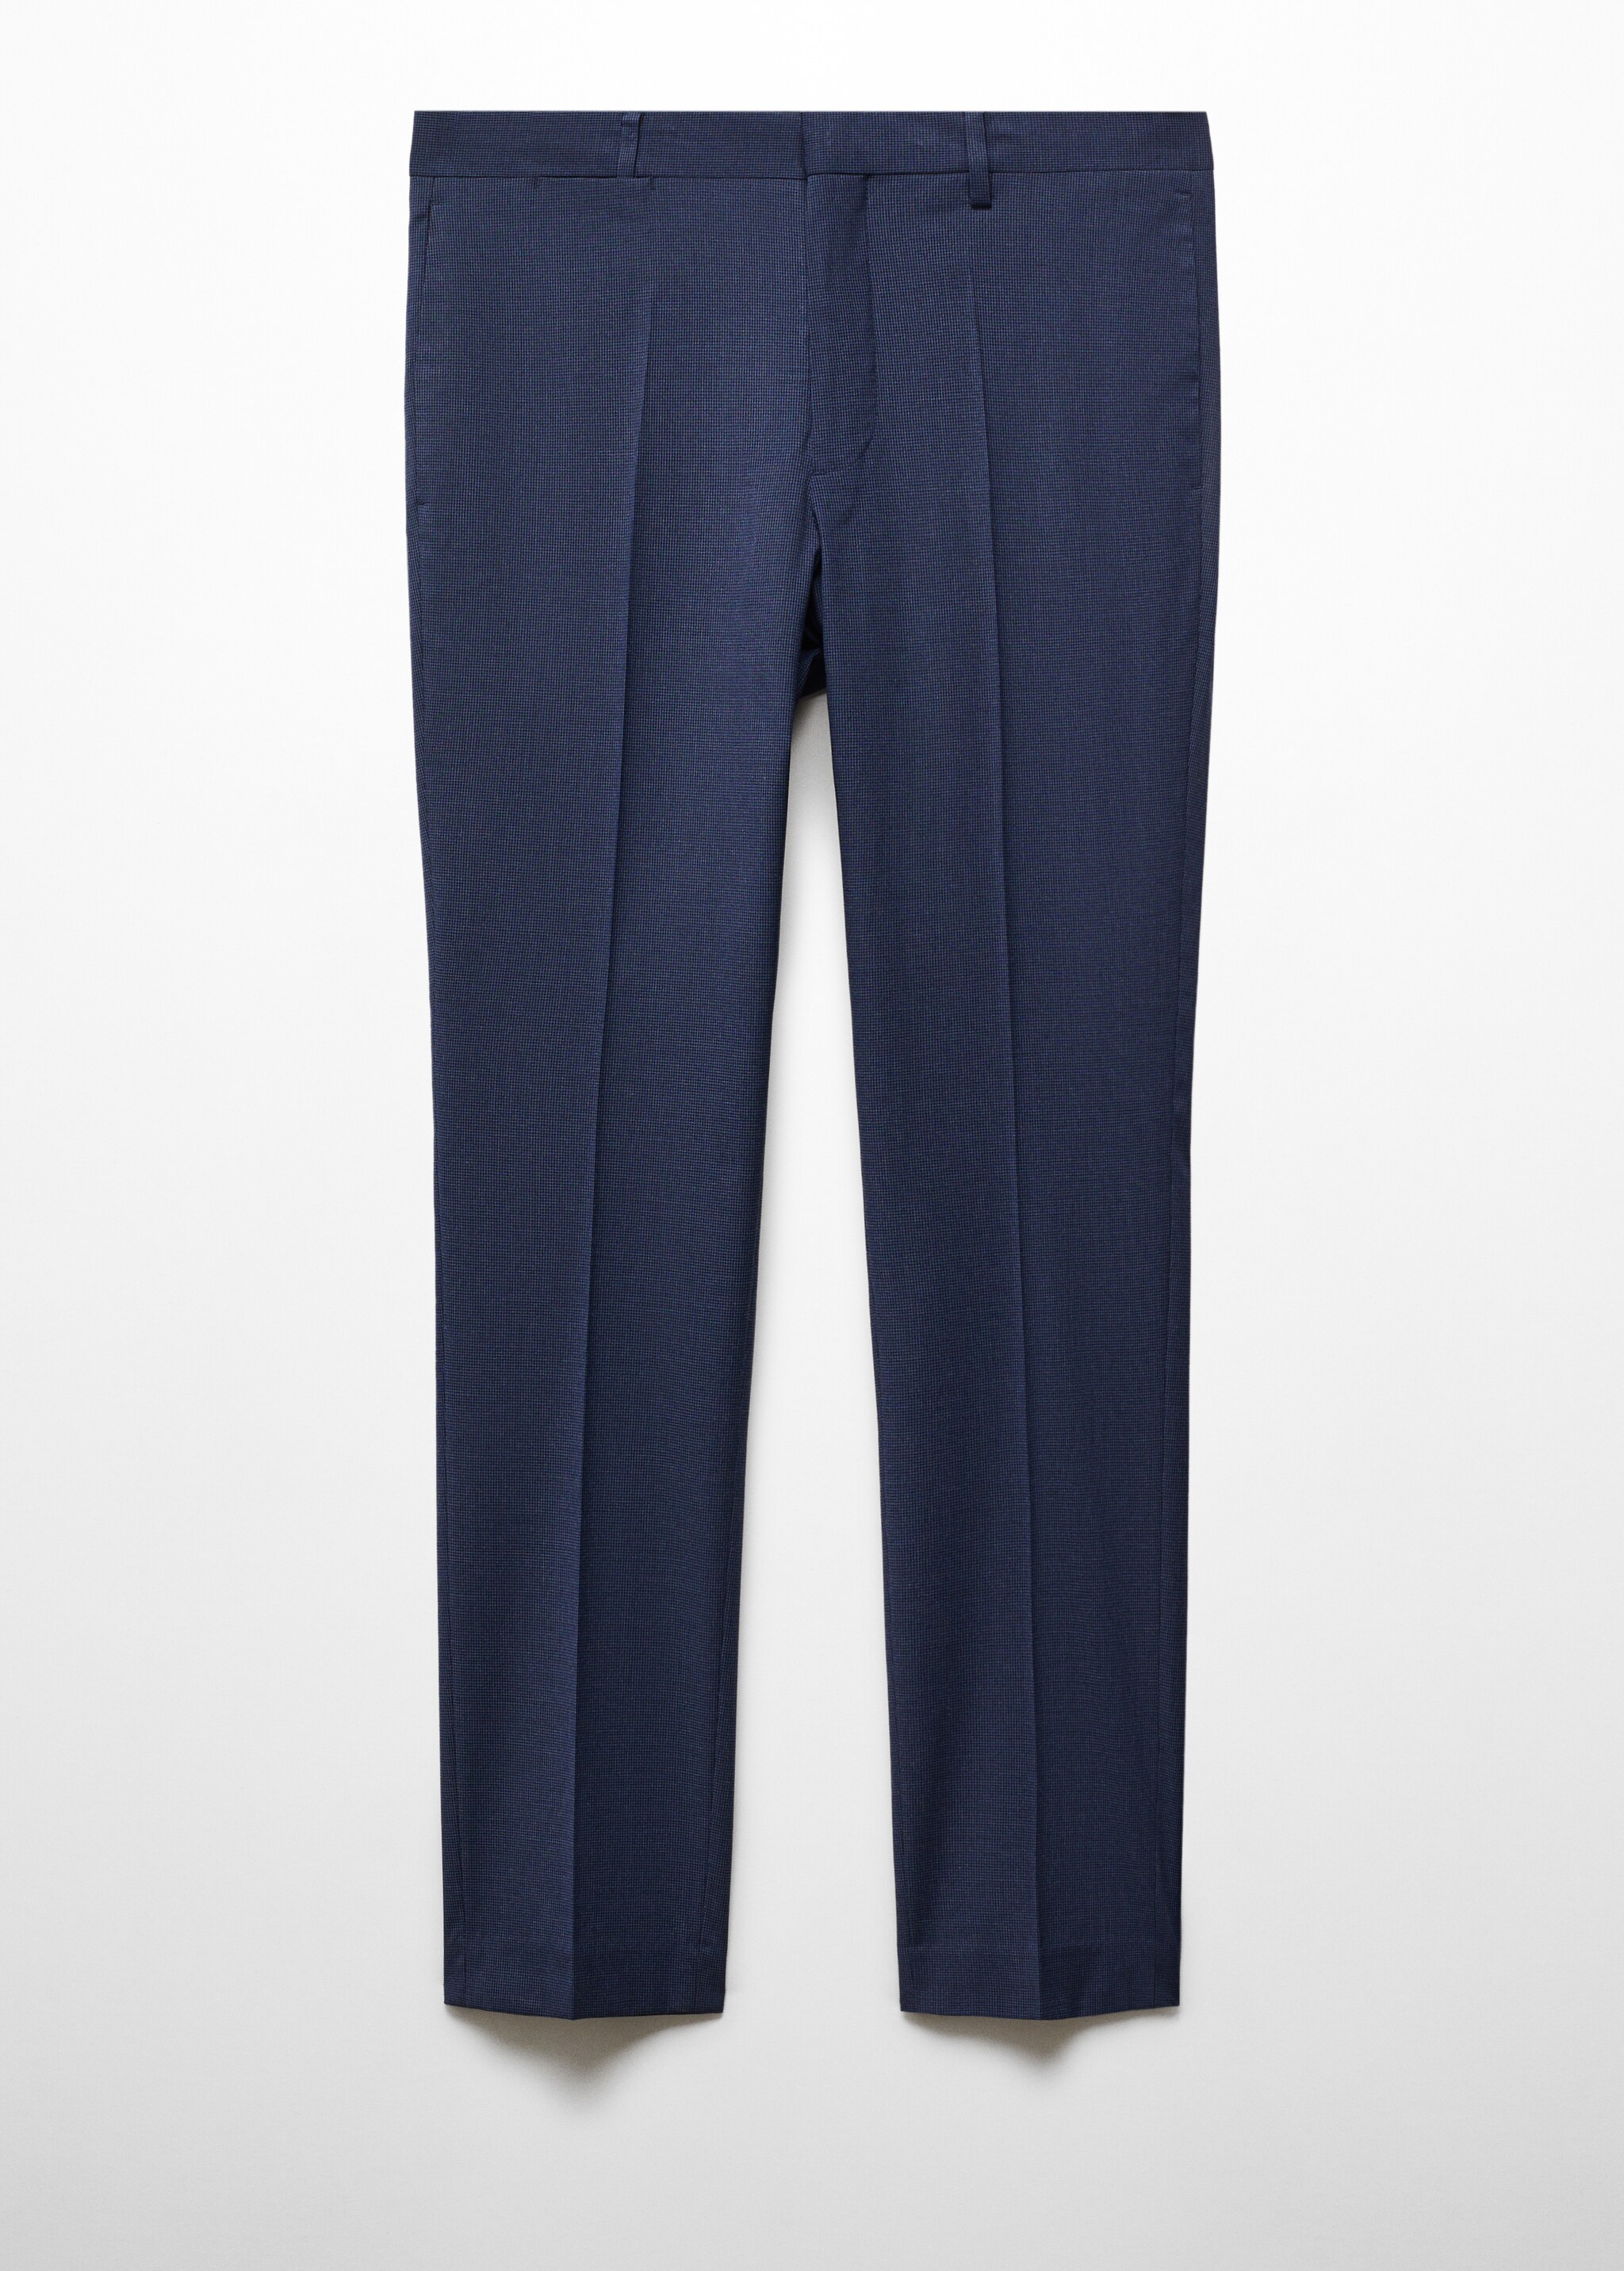 Süper slim fit desenli kumaş pantolon - Modelsiz ürün